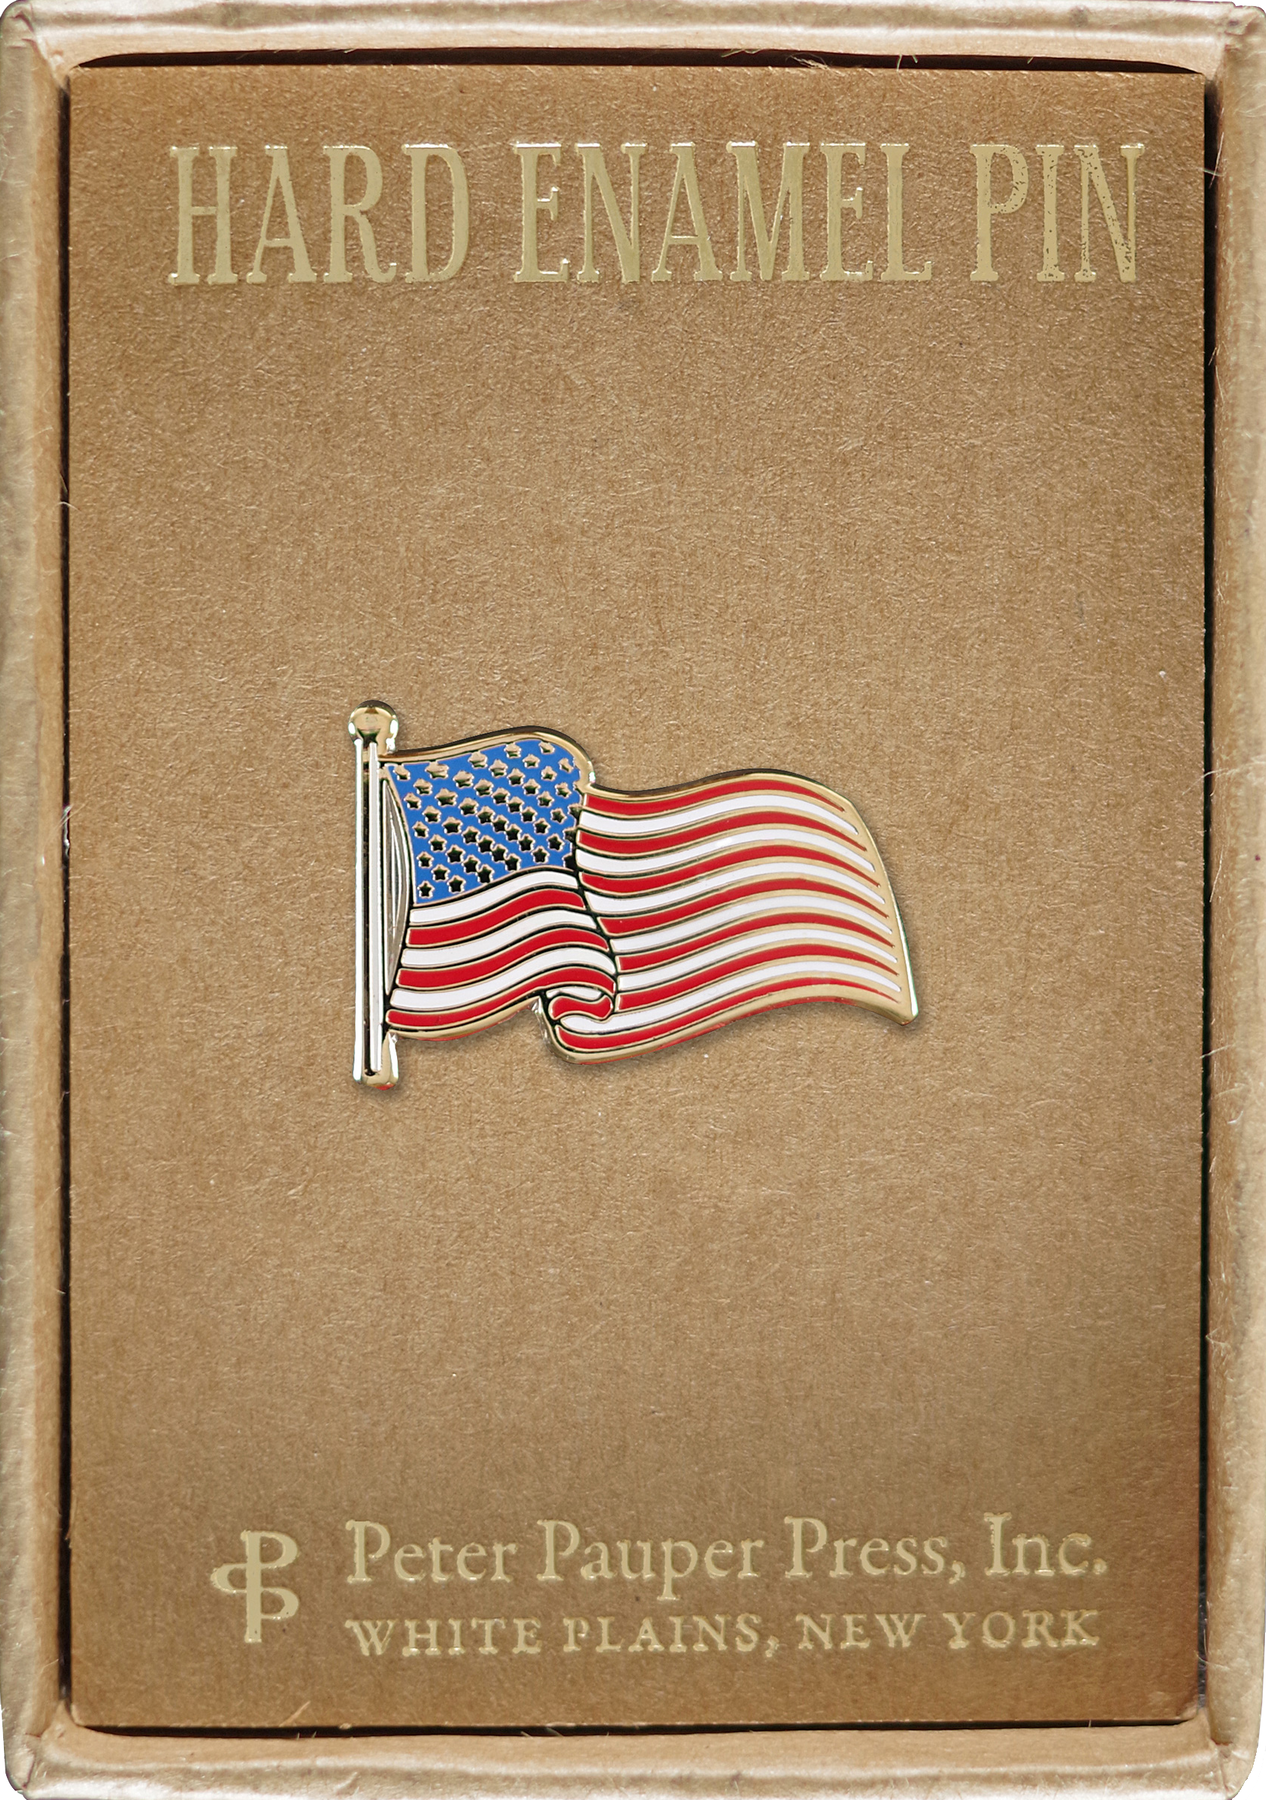 USA Flag Enamel Pin